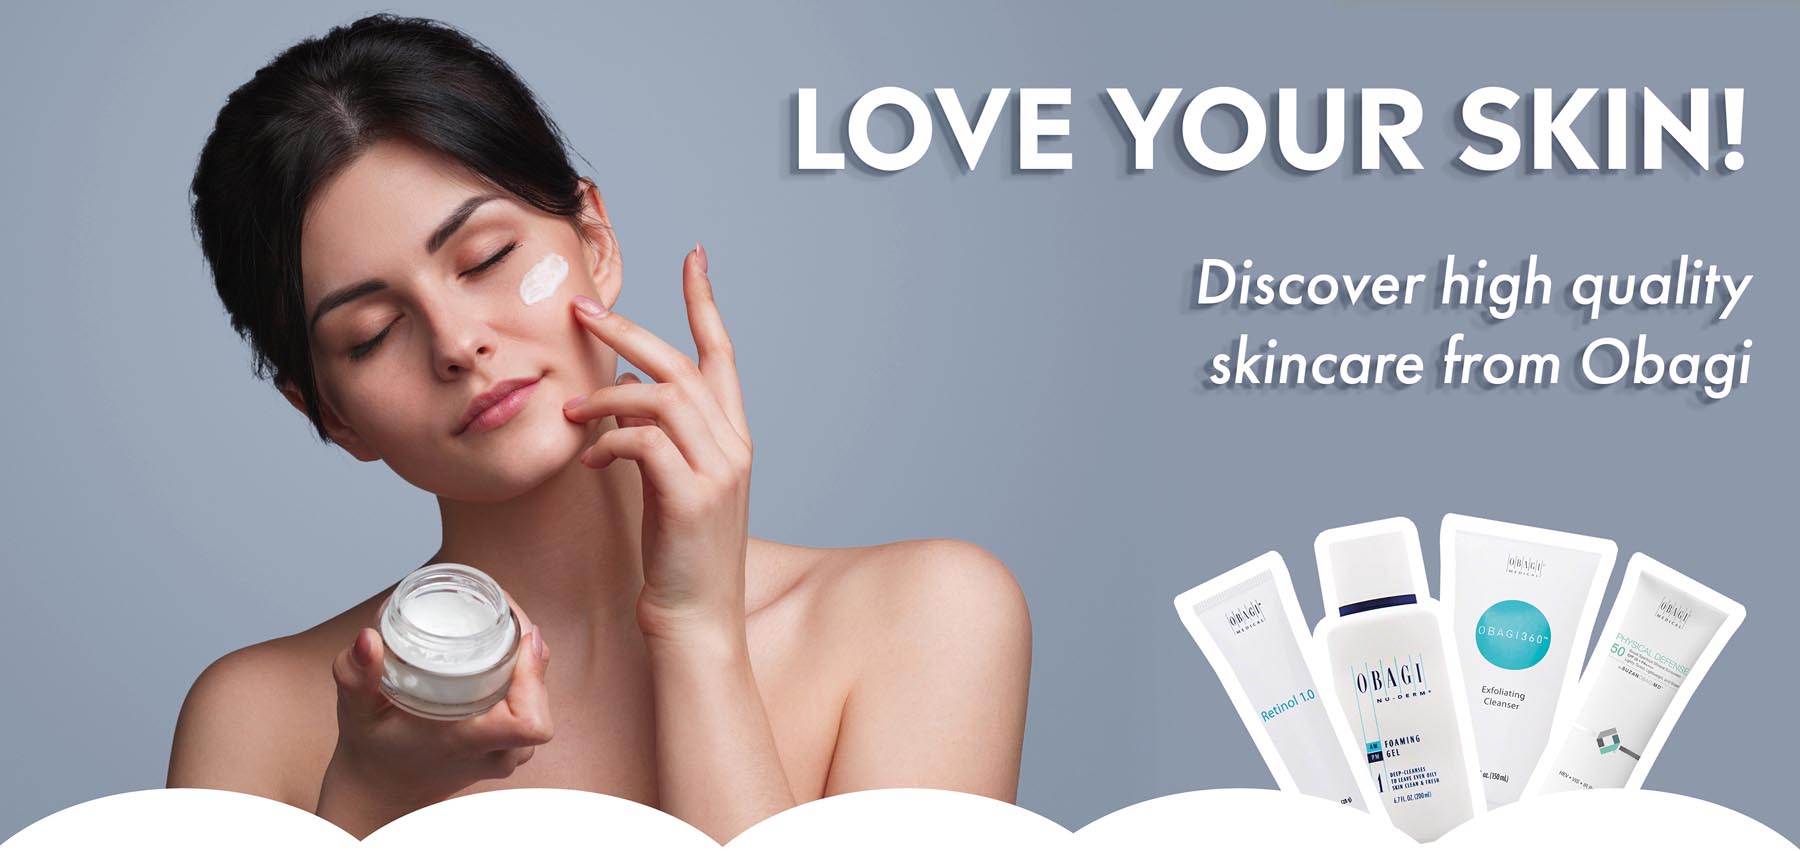 Love your skin!